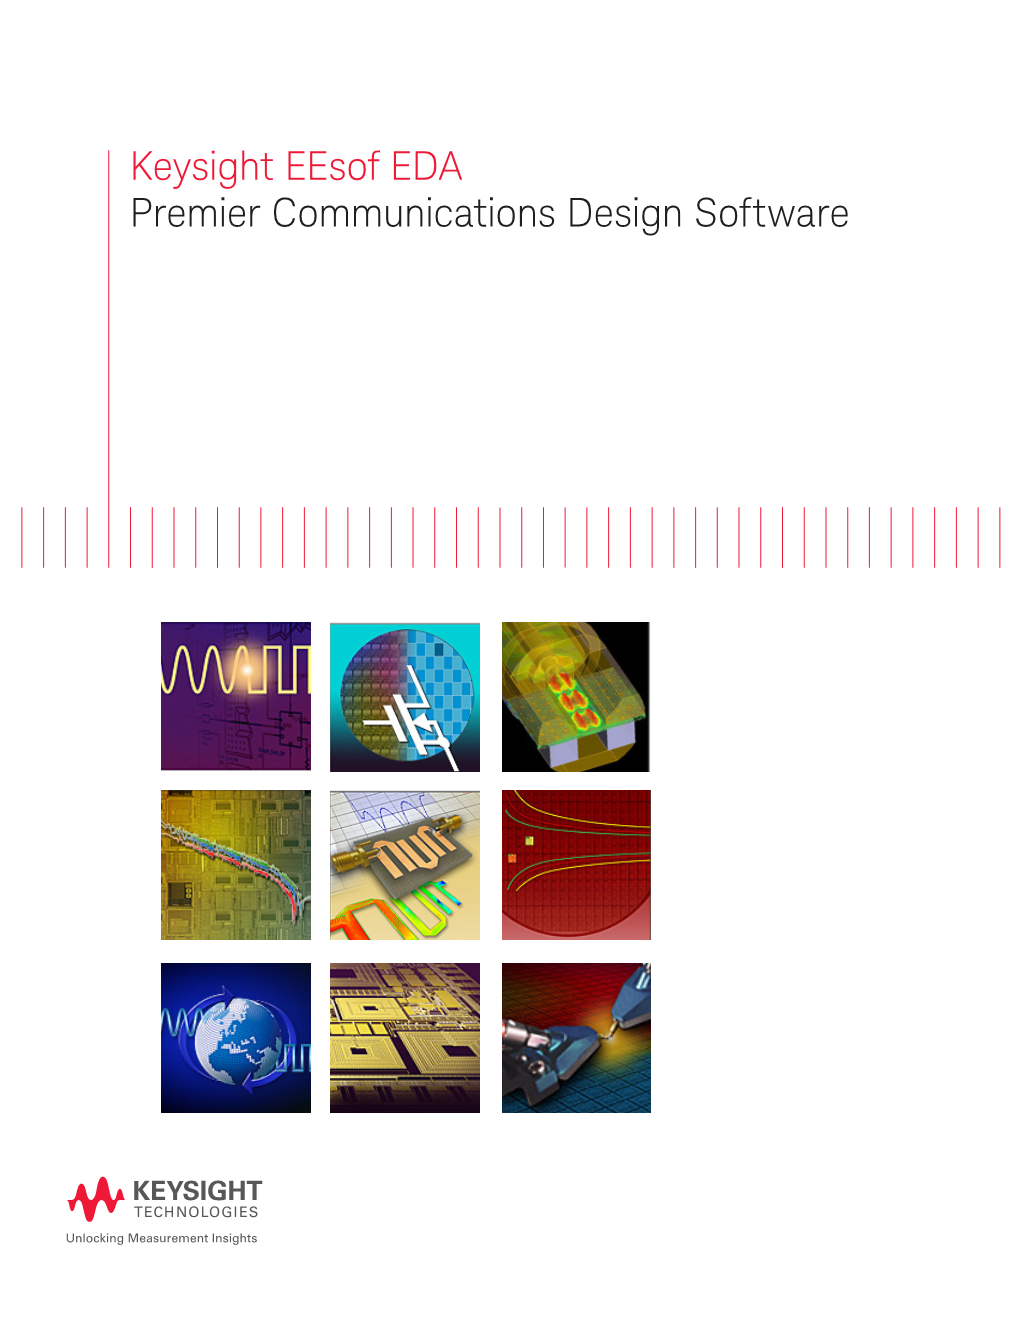 Eesof EDA Premier Communications Design Software 02 | Keysight | Premier Communications Design Software - Brochure